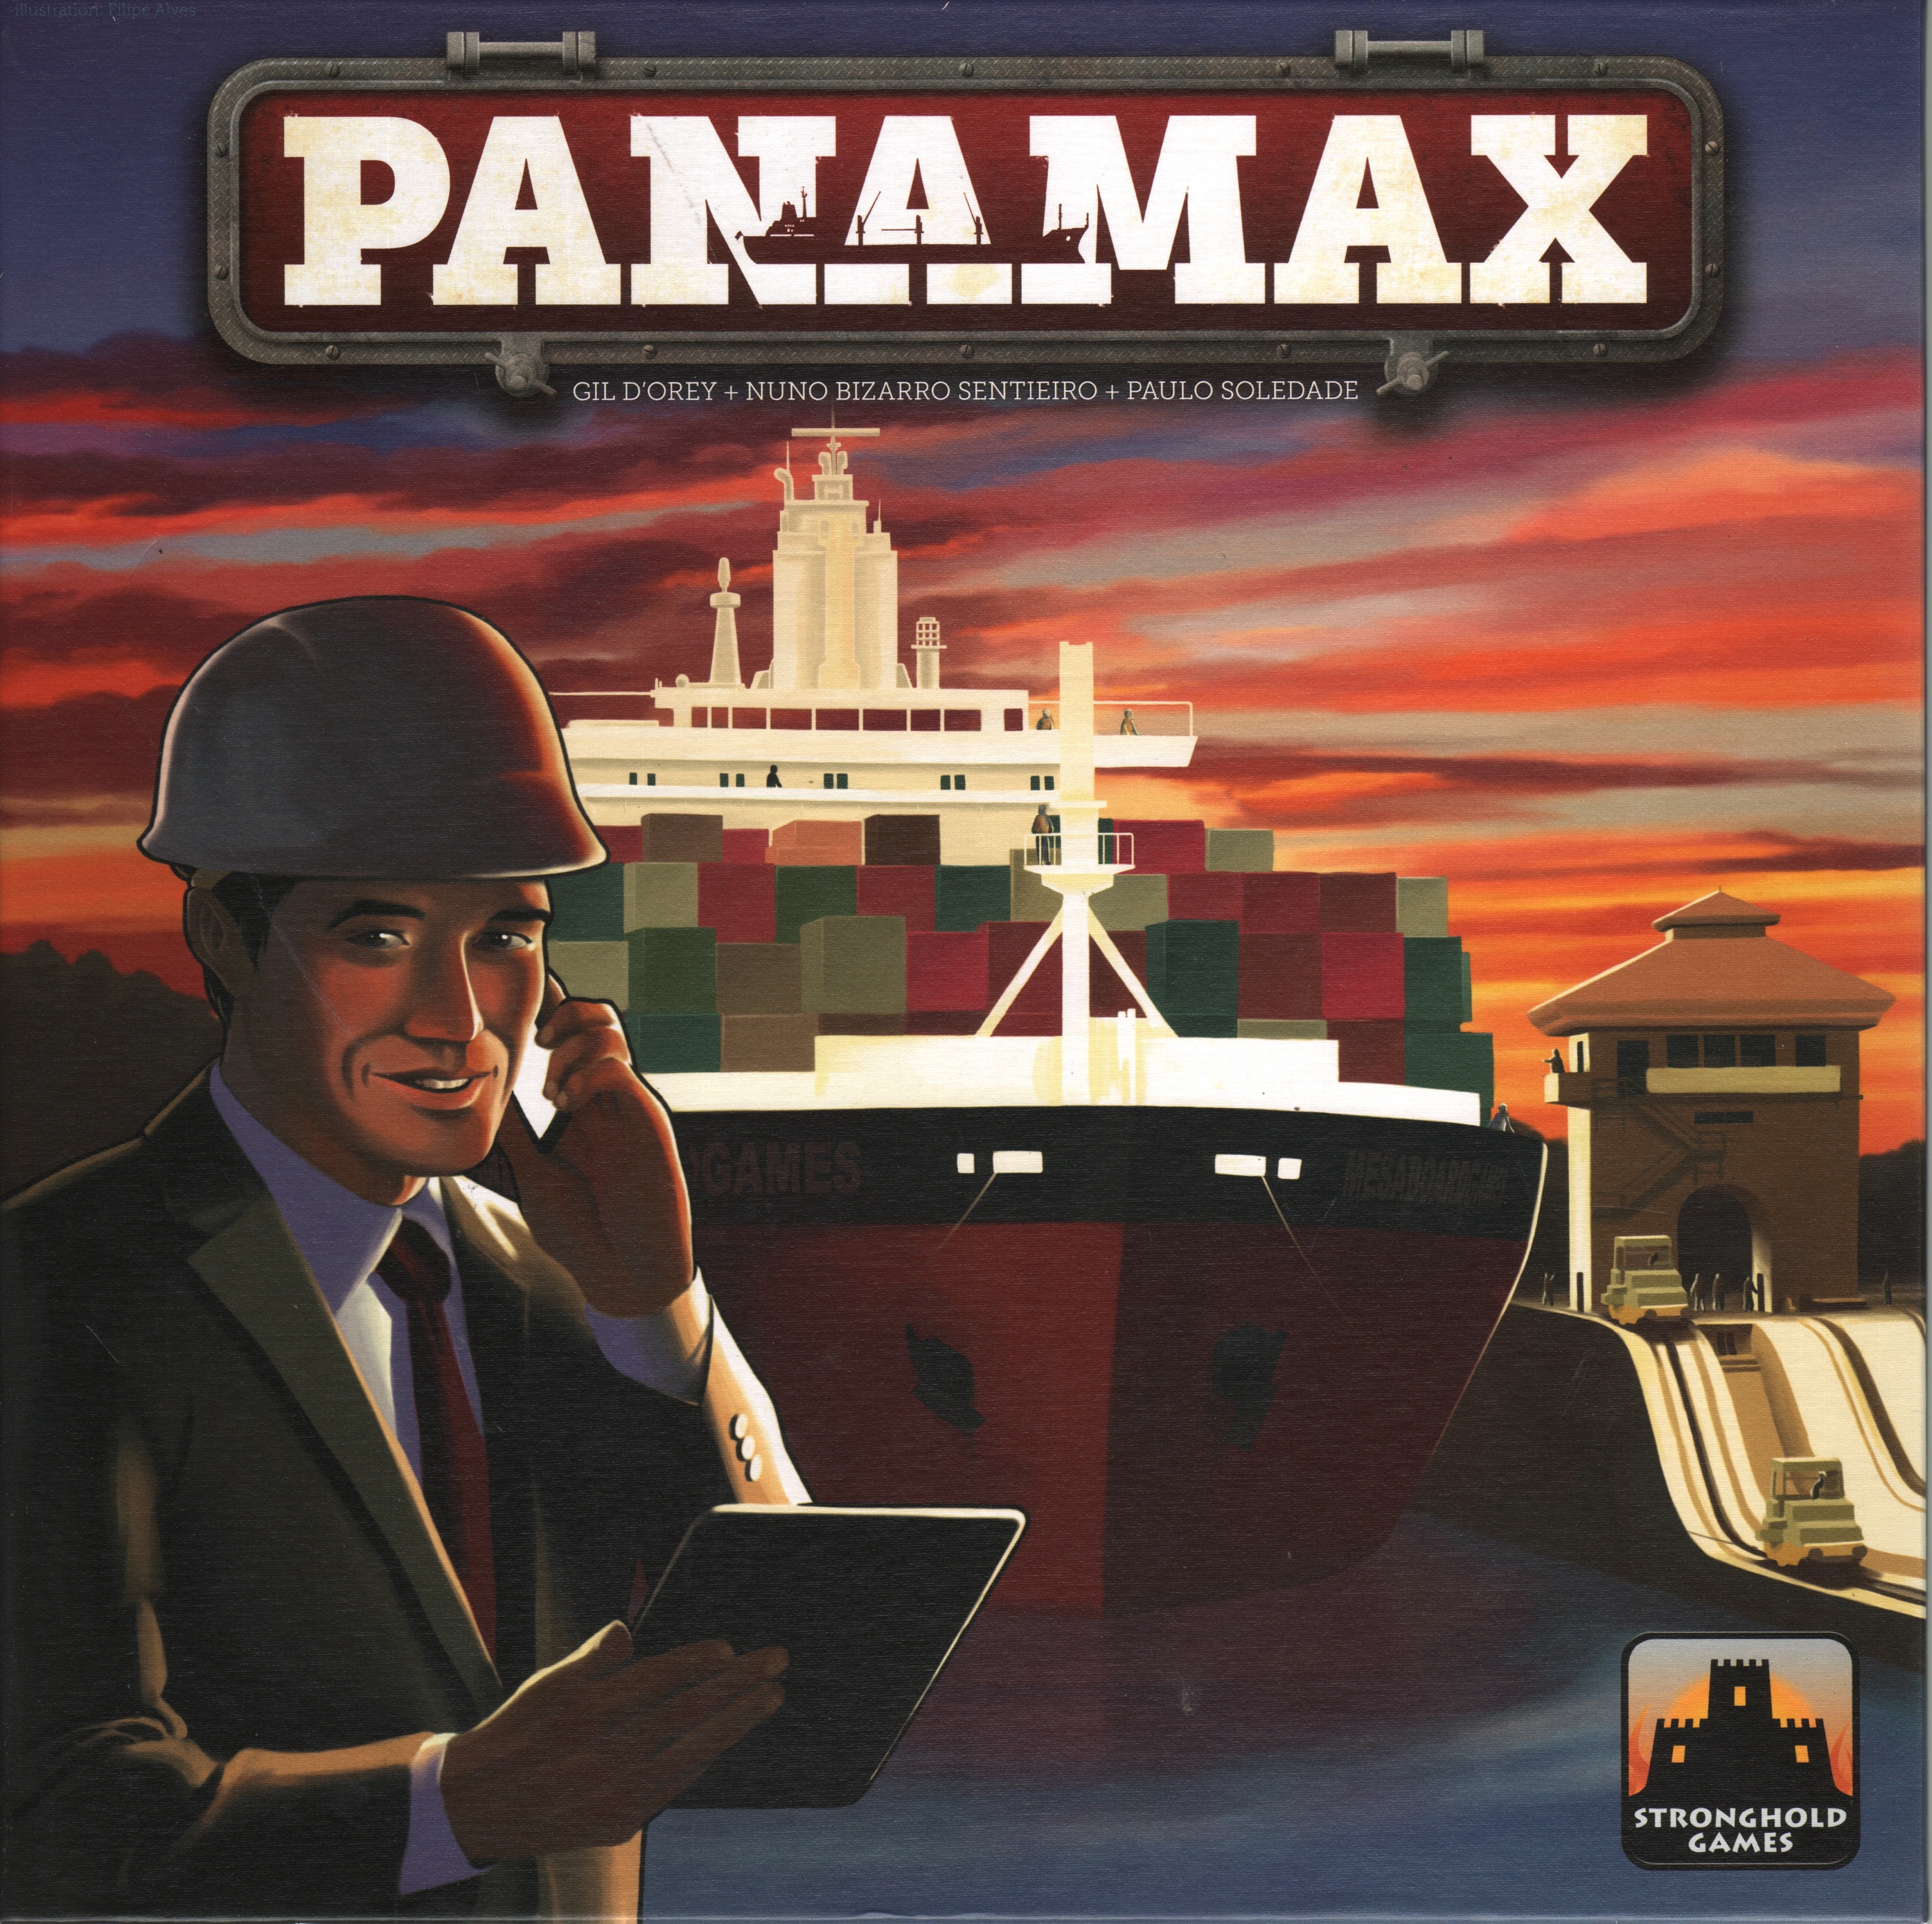 Panamax